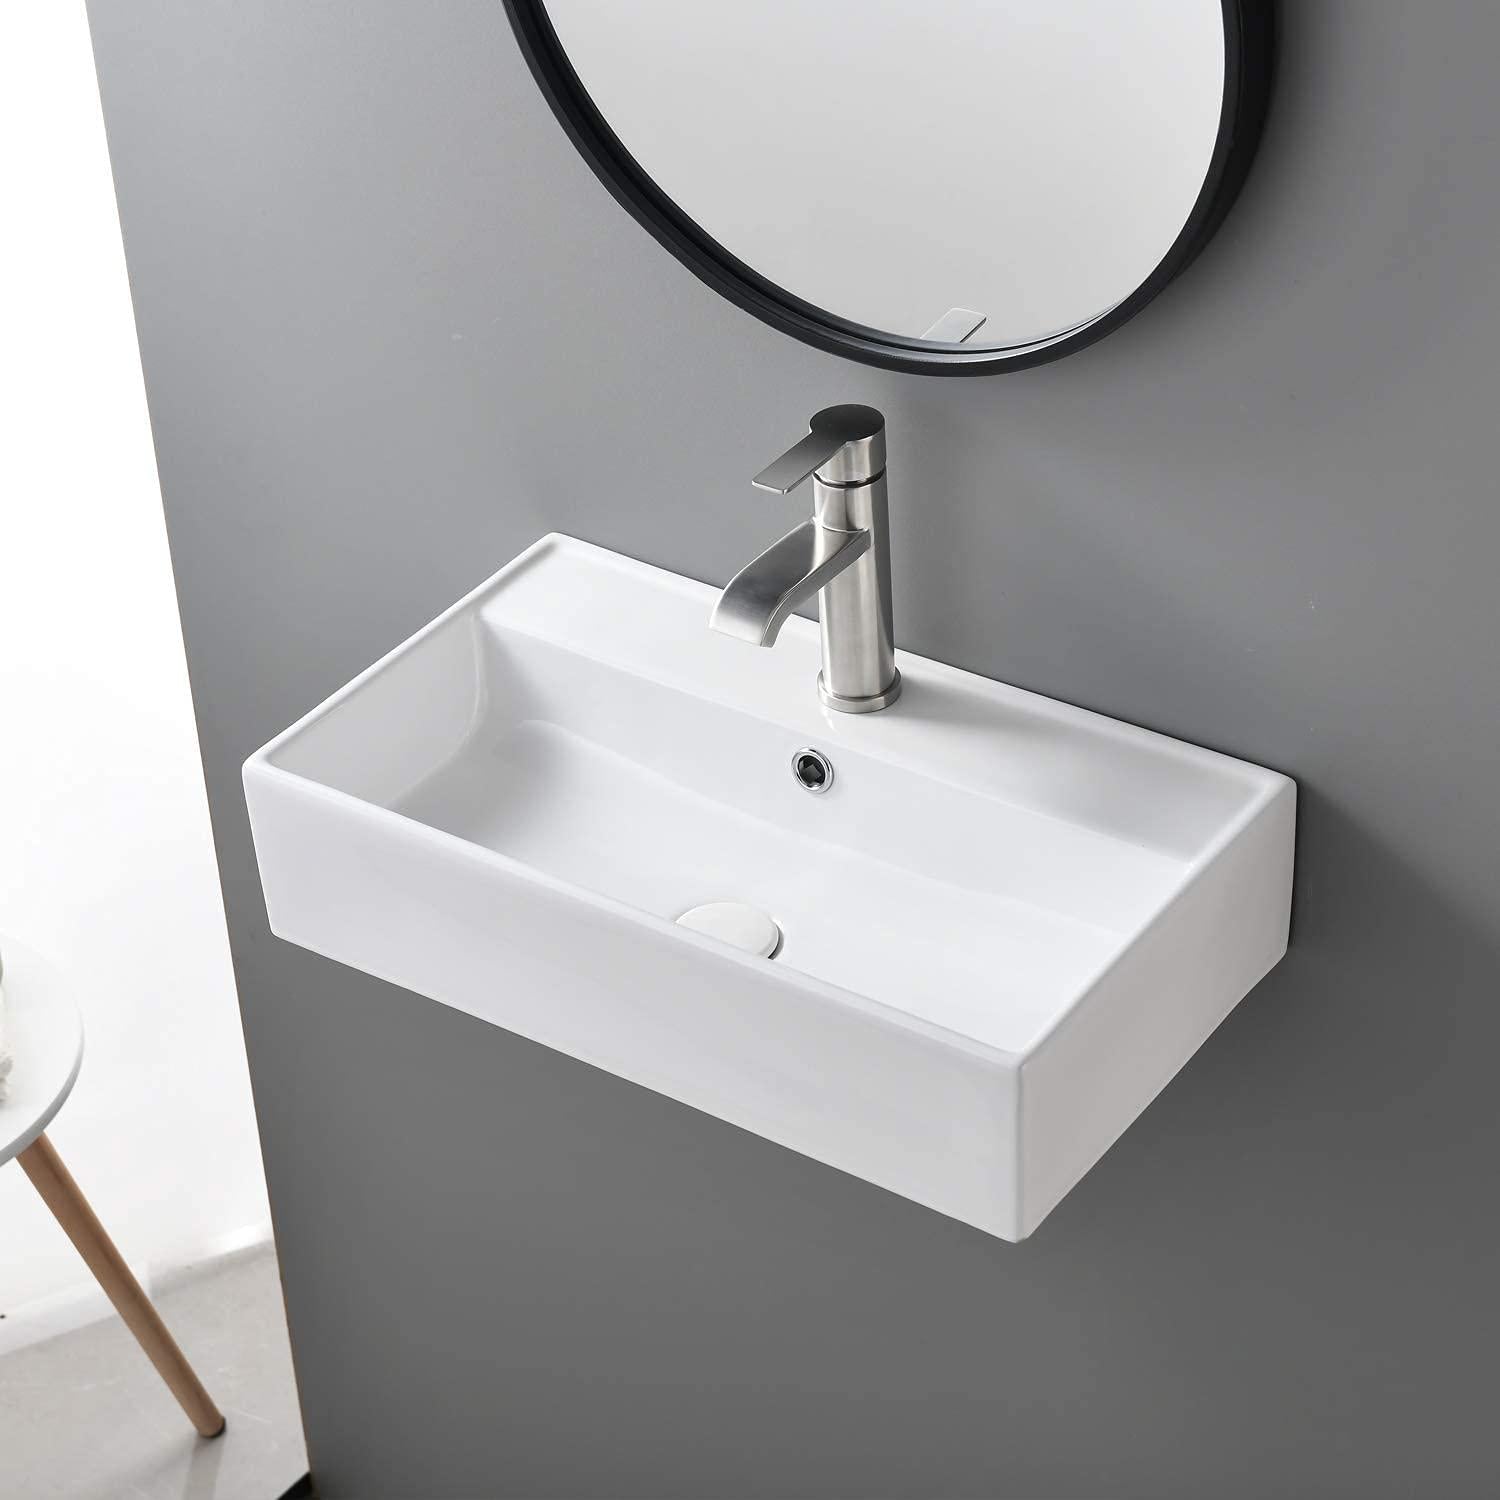 SHACO Contemporary 21 X 12 Porcelain Ceramic Wall Mounted Bathroom Vessel Sink, Rectangular One Hole Bowl Lavatory Vanity Small Bathroom Sink